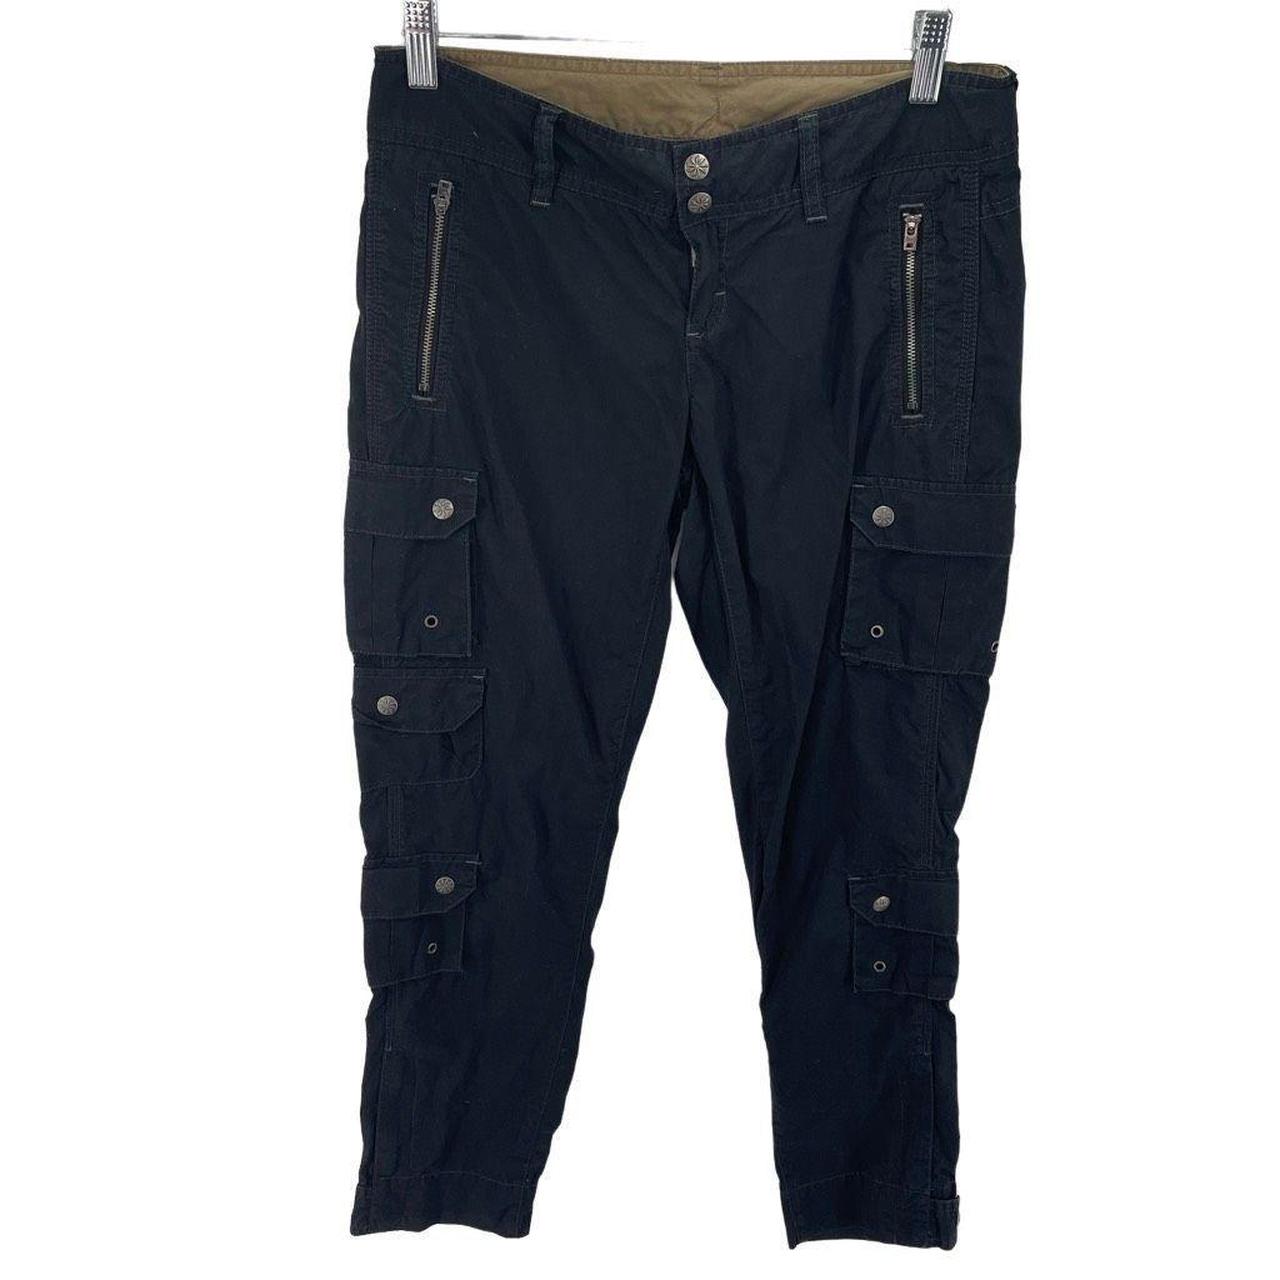 Sianlanhiam Oblique zip pocket cargo pants casual trousers joggers ykk  zipper stretch nylon material techwear aesthetic gorpcore - AliExpress